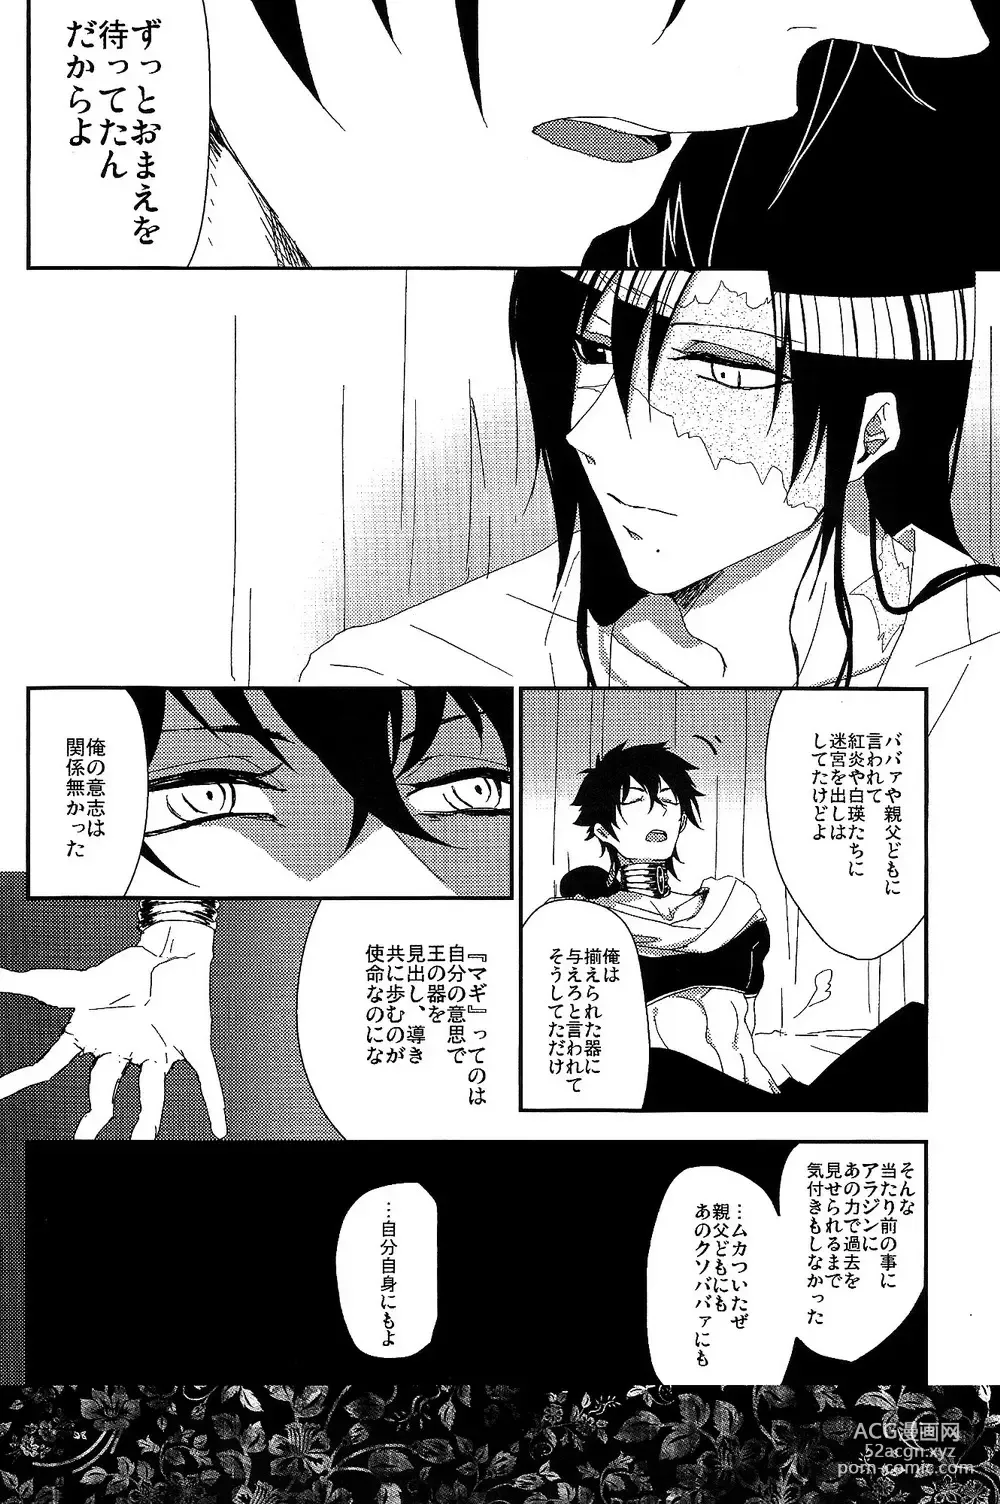 Page 7 of doujinshi GOLDEN ERROR